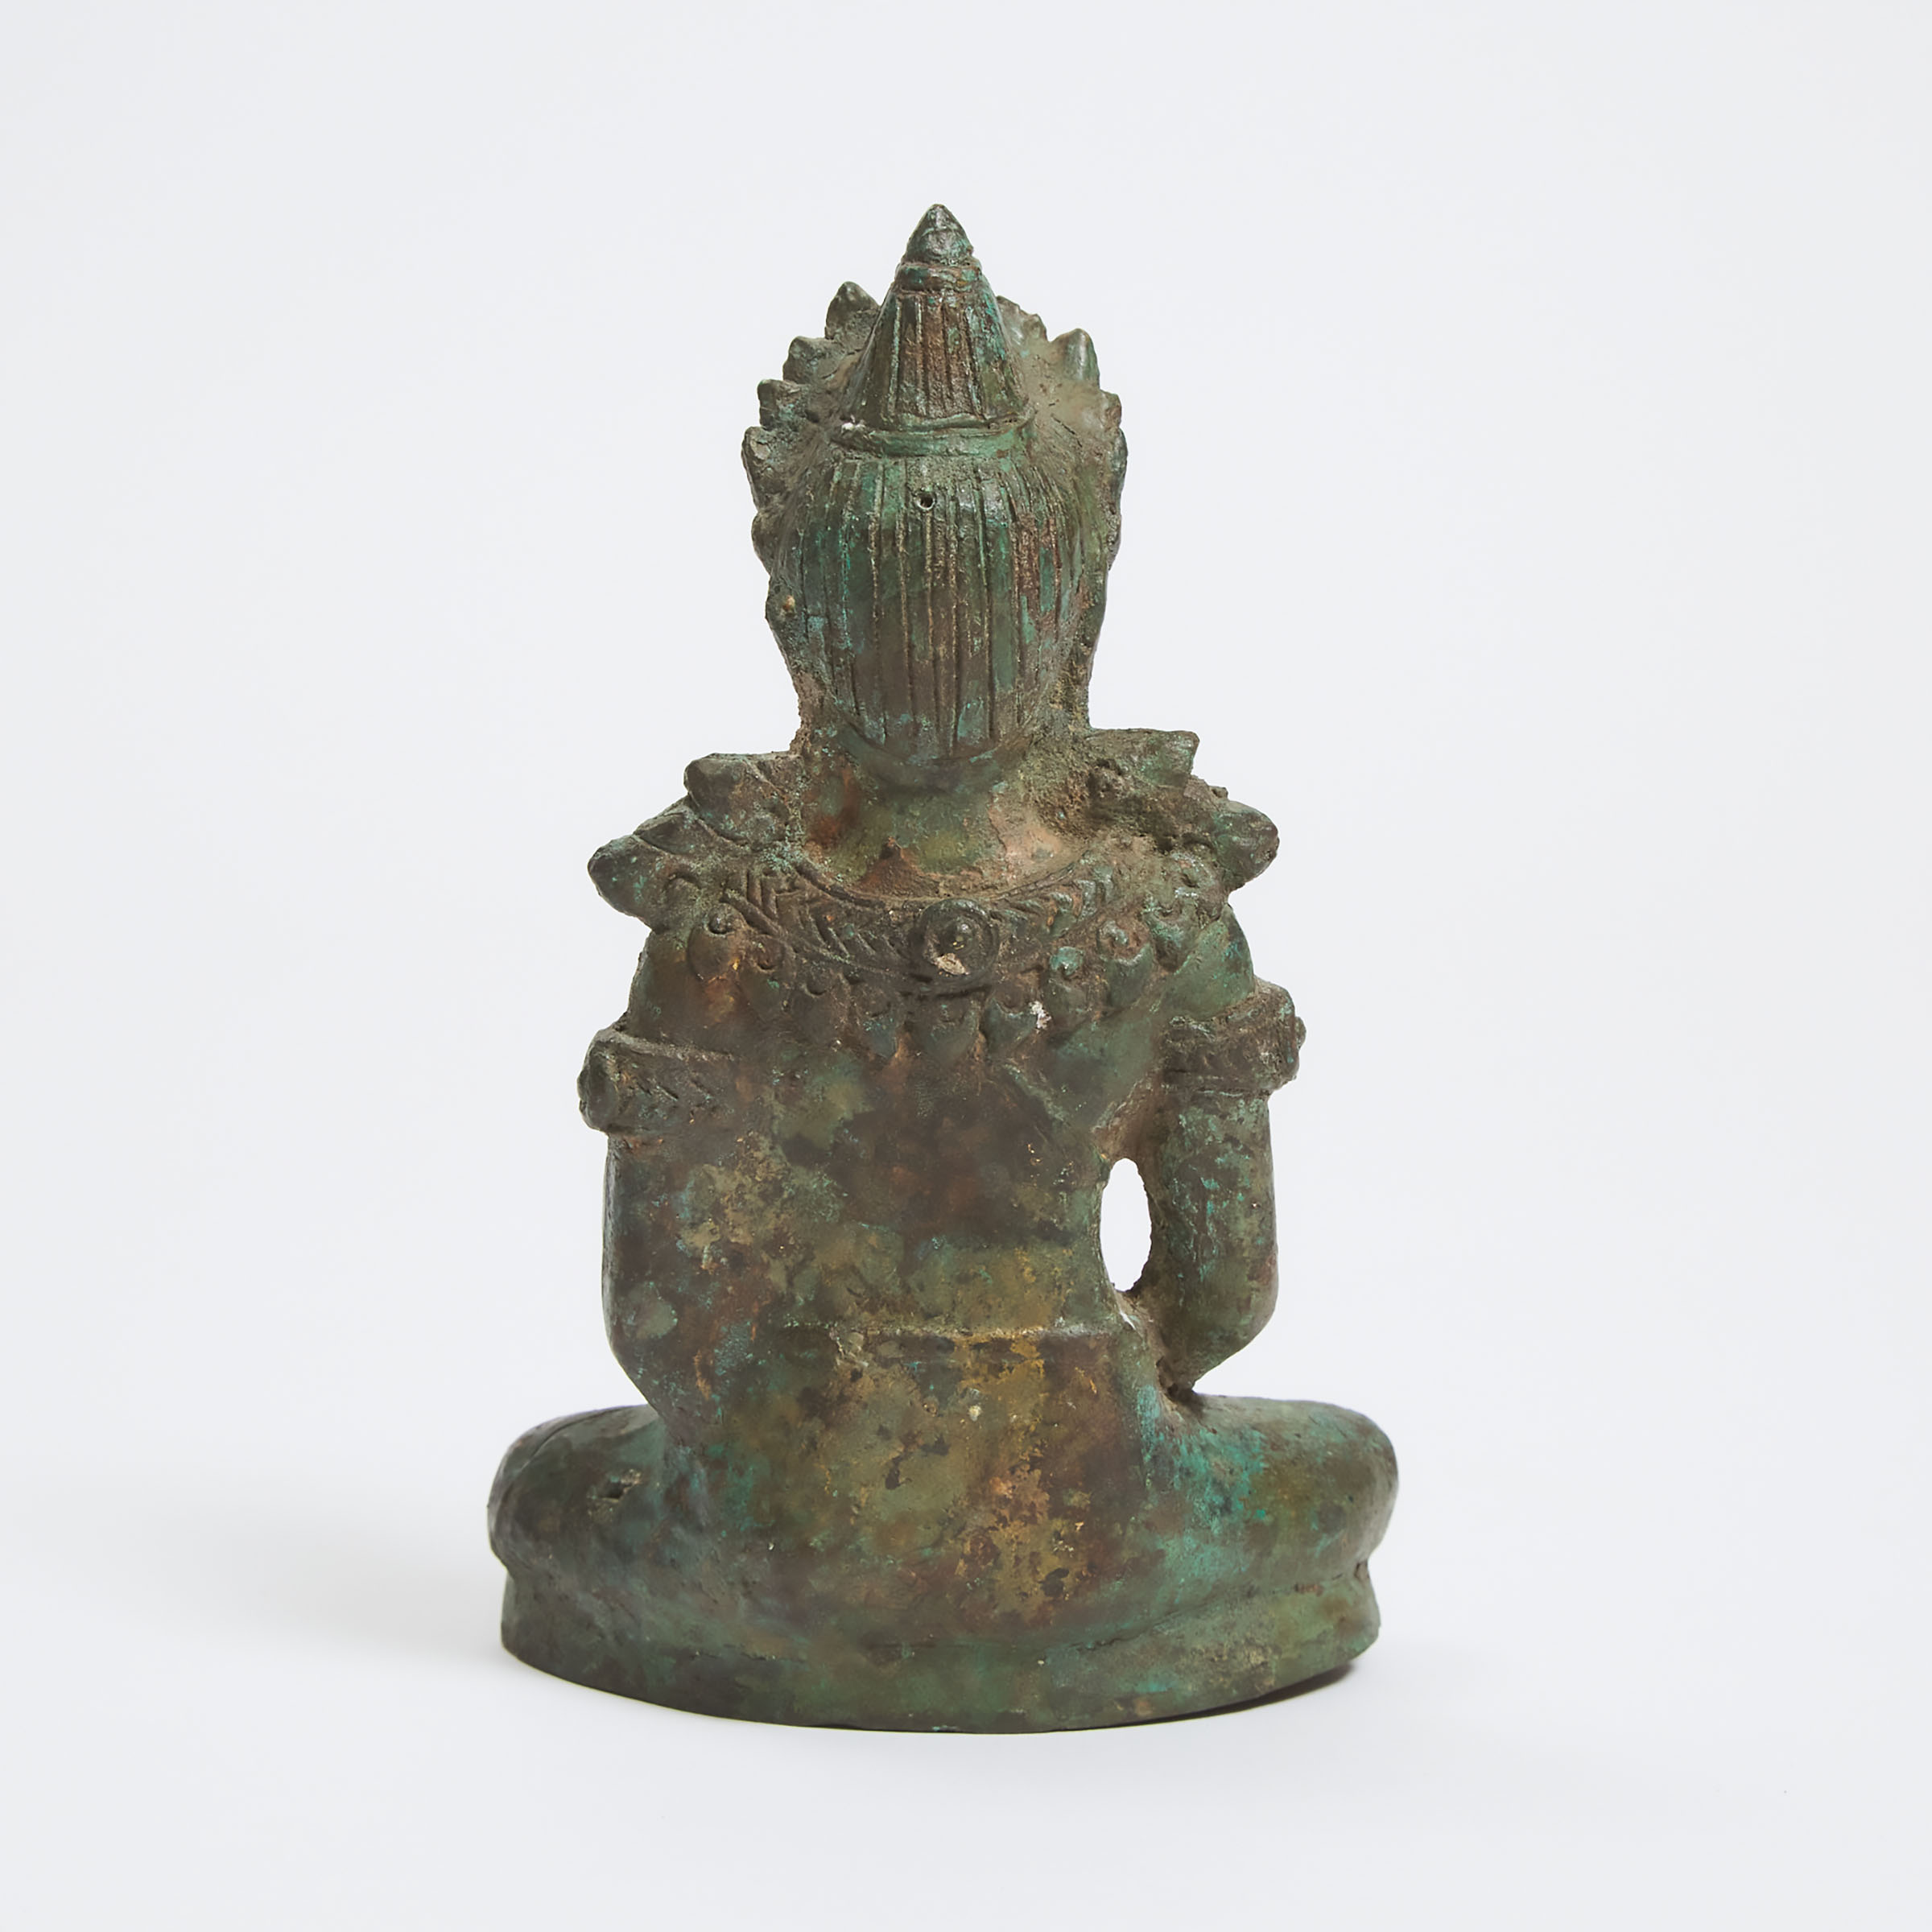 A Bronze Seated Figure of Buddha, Cambodia, 14th Century